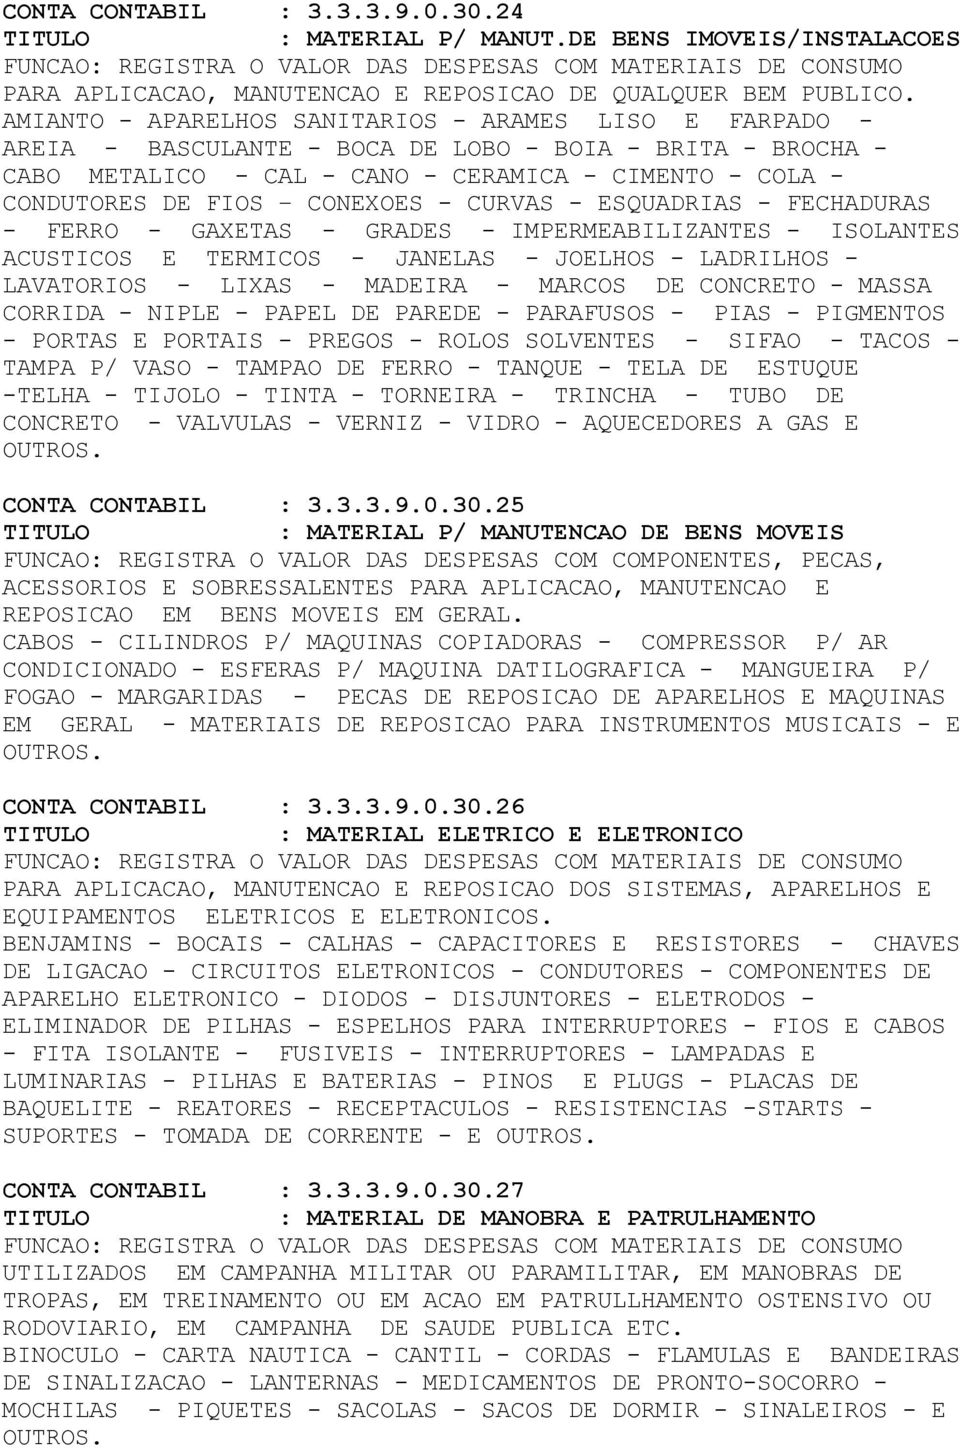 AMIANTO - APARELHOS SANITARIOS - ARAMES LISO E FARPADO - AREIA - BASCULANTE - BOCA DE LOBO - BOIA - BRITA - BROCHA - CABO METALICO - CAL - CANO - CERAMICA - CIMENTO - COLA - CONDUTORES DE FIOS